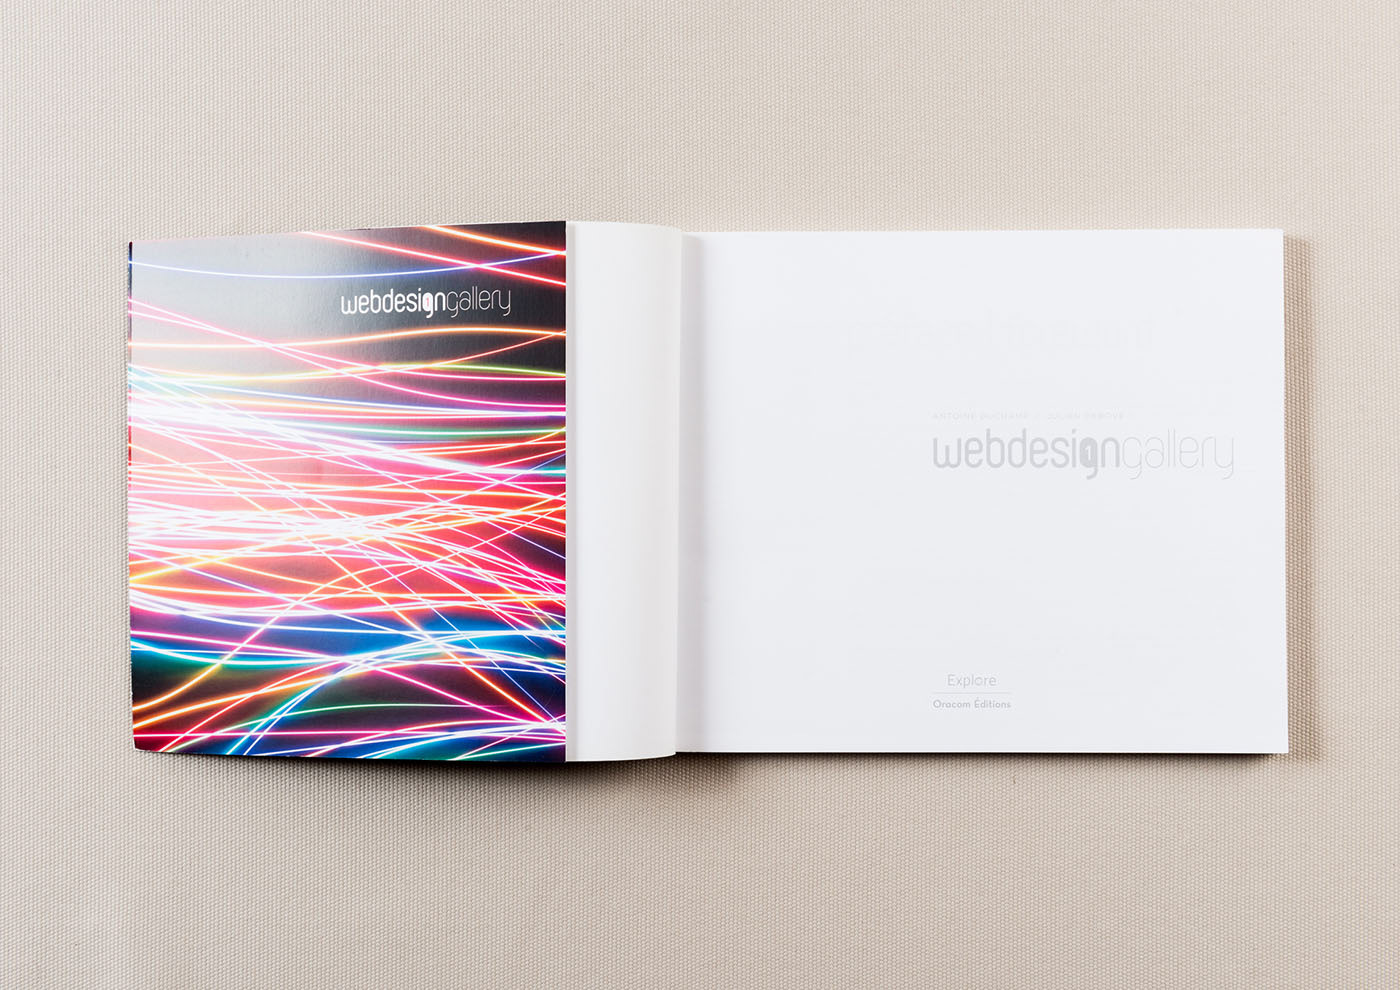 webdesign gallery Webdesign Web design Oracom book artbook book design phaidon